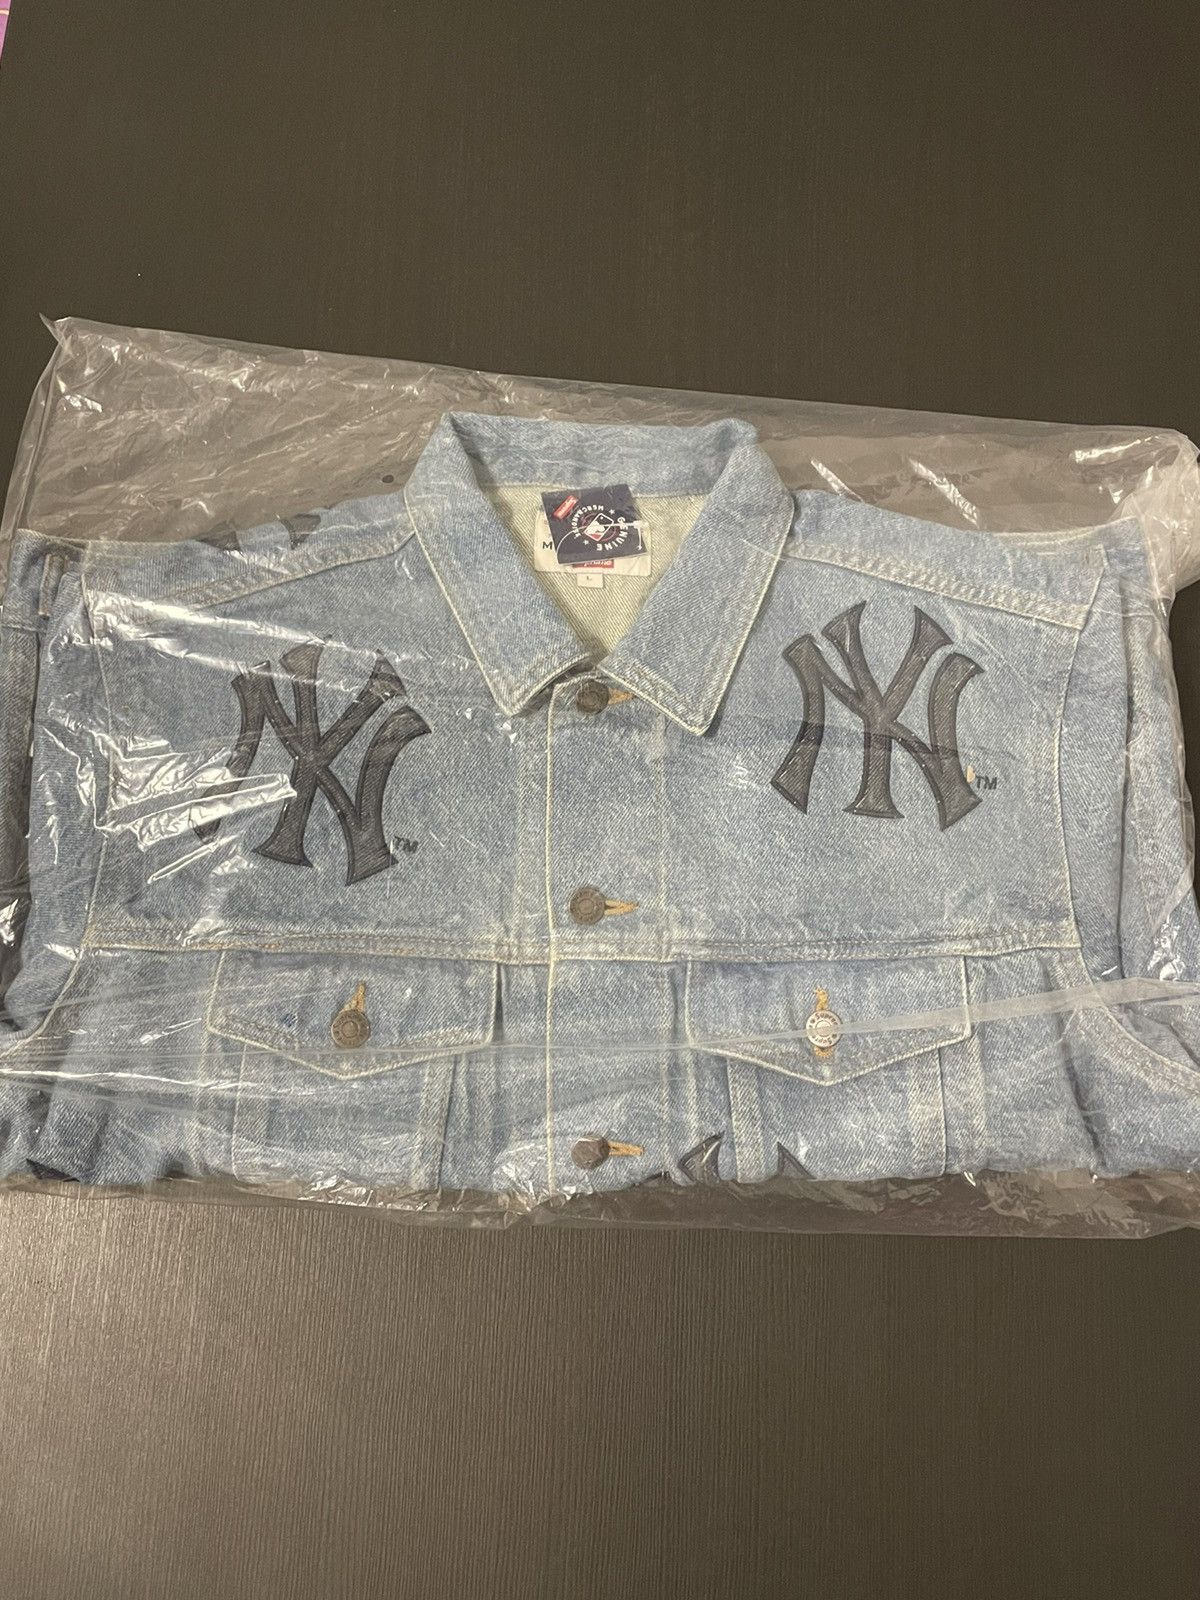 Jacketars Supreme x New York Yankees Denim Jacket